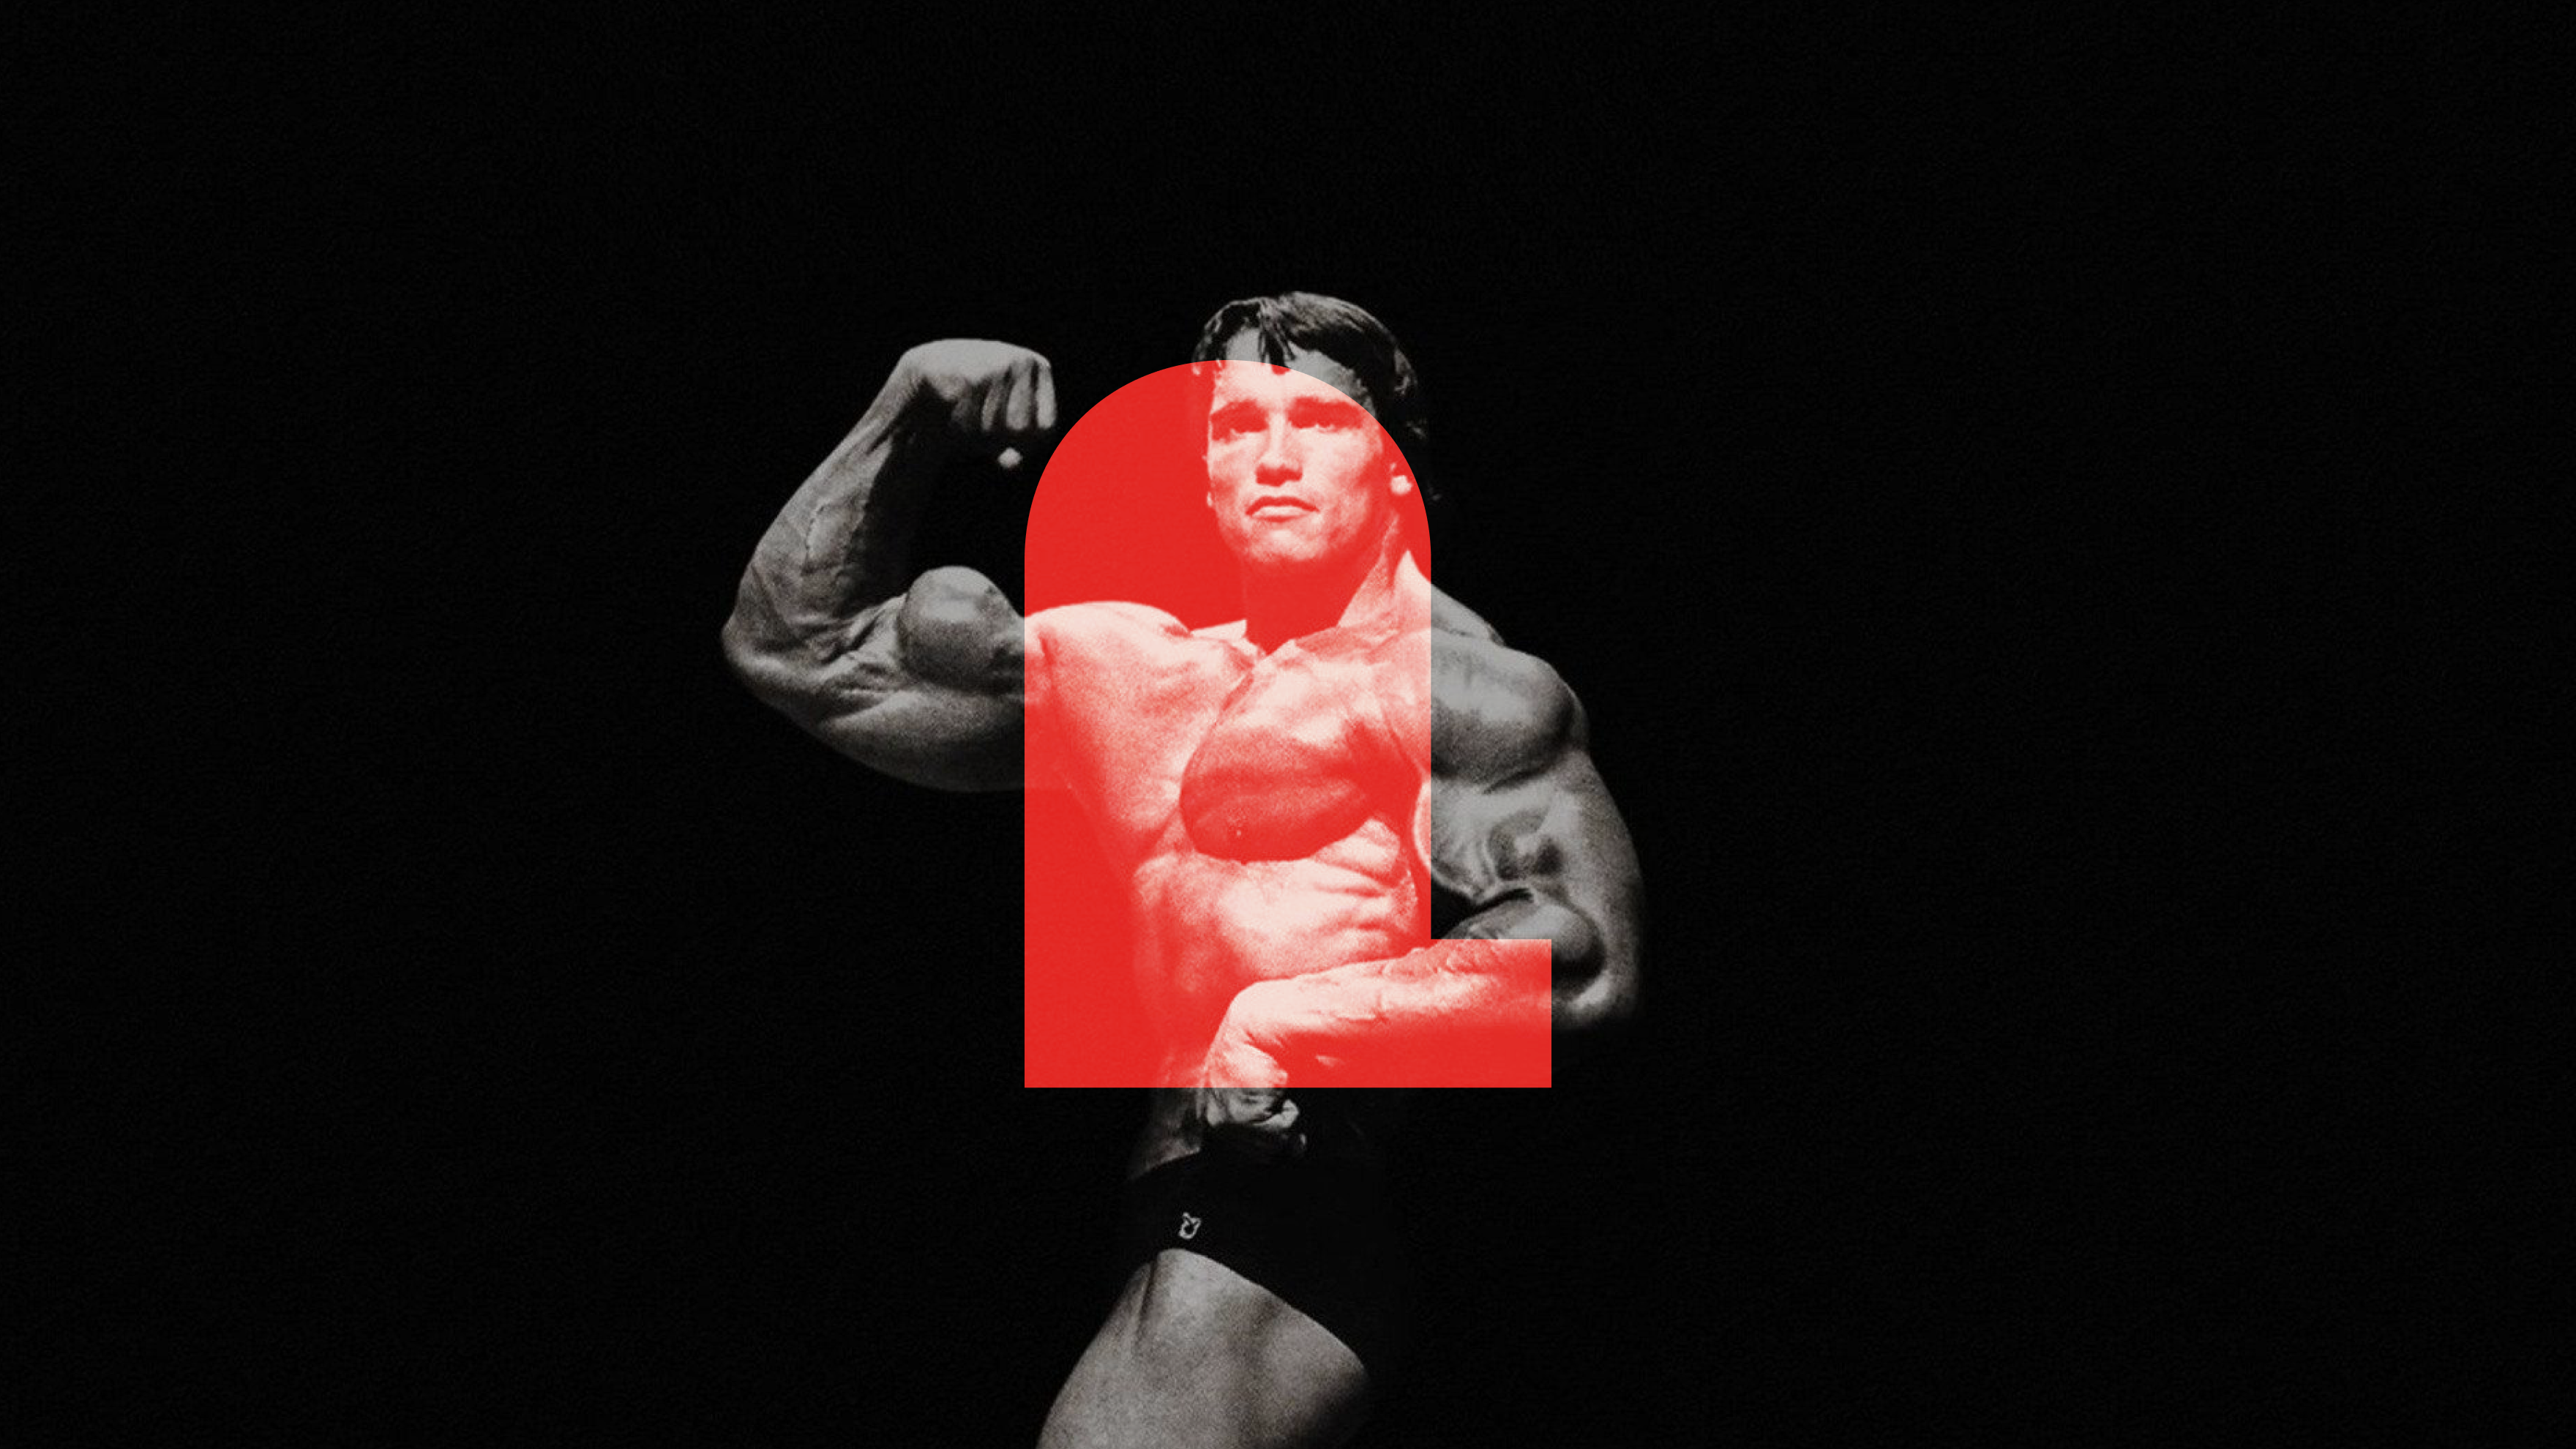 Sculpting Success: Designing a Fitness App for Arnold Schwarzenegger